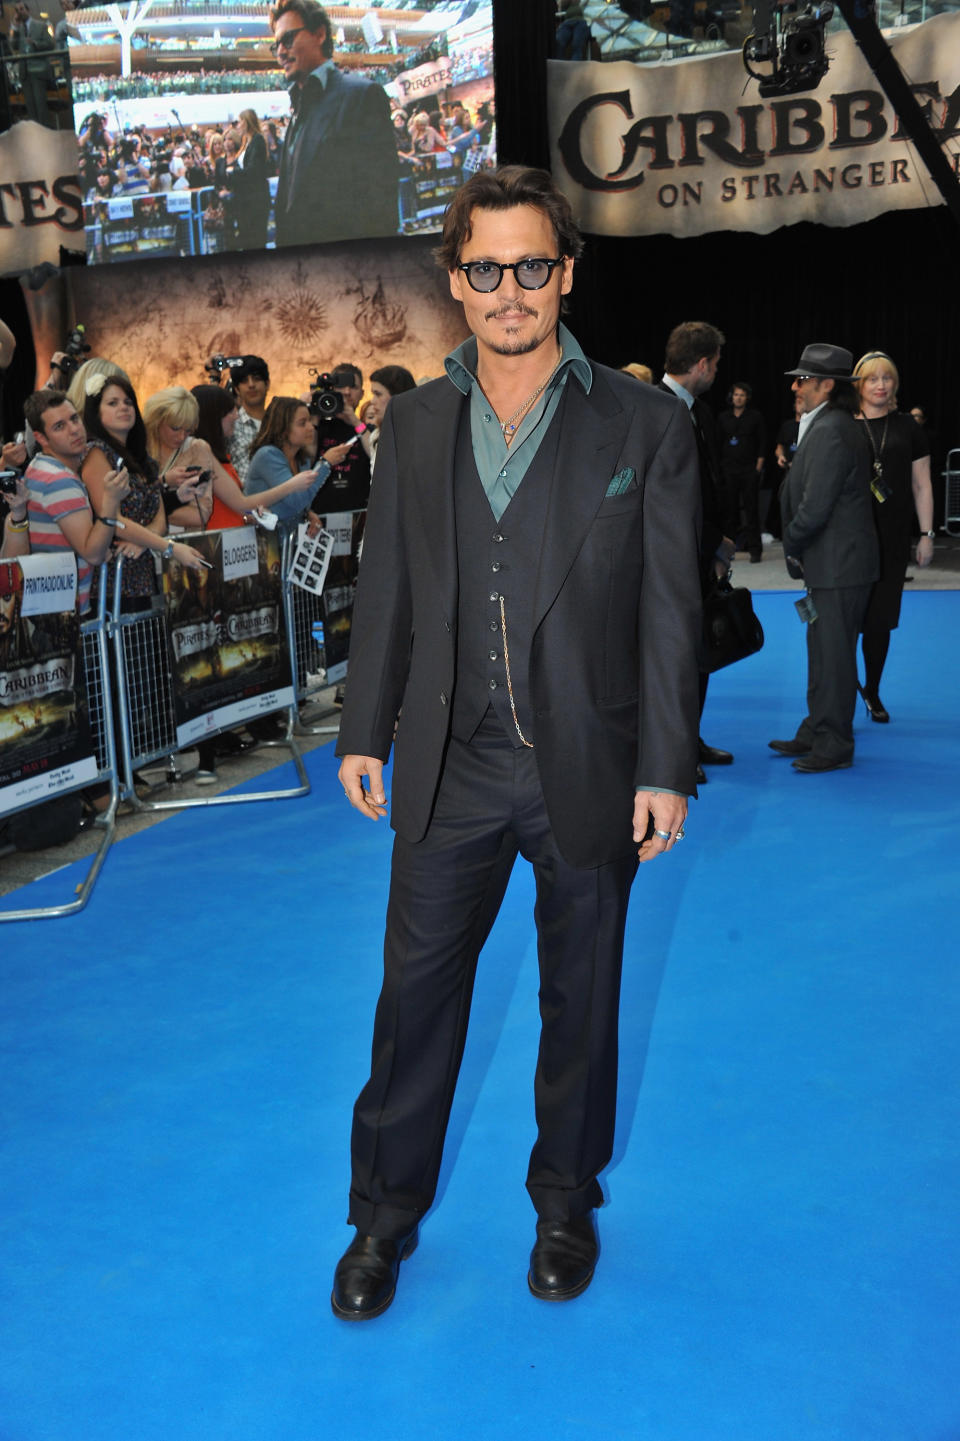 Depp in a three-piece suit